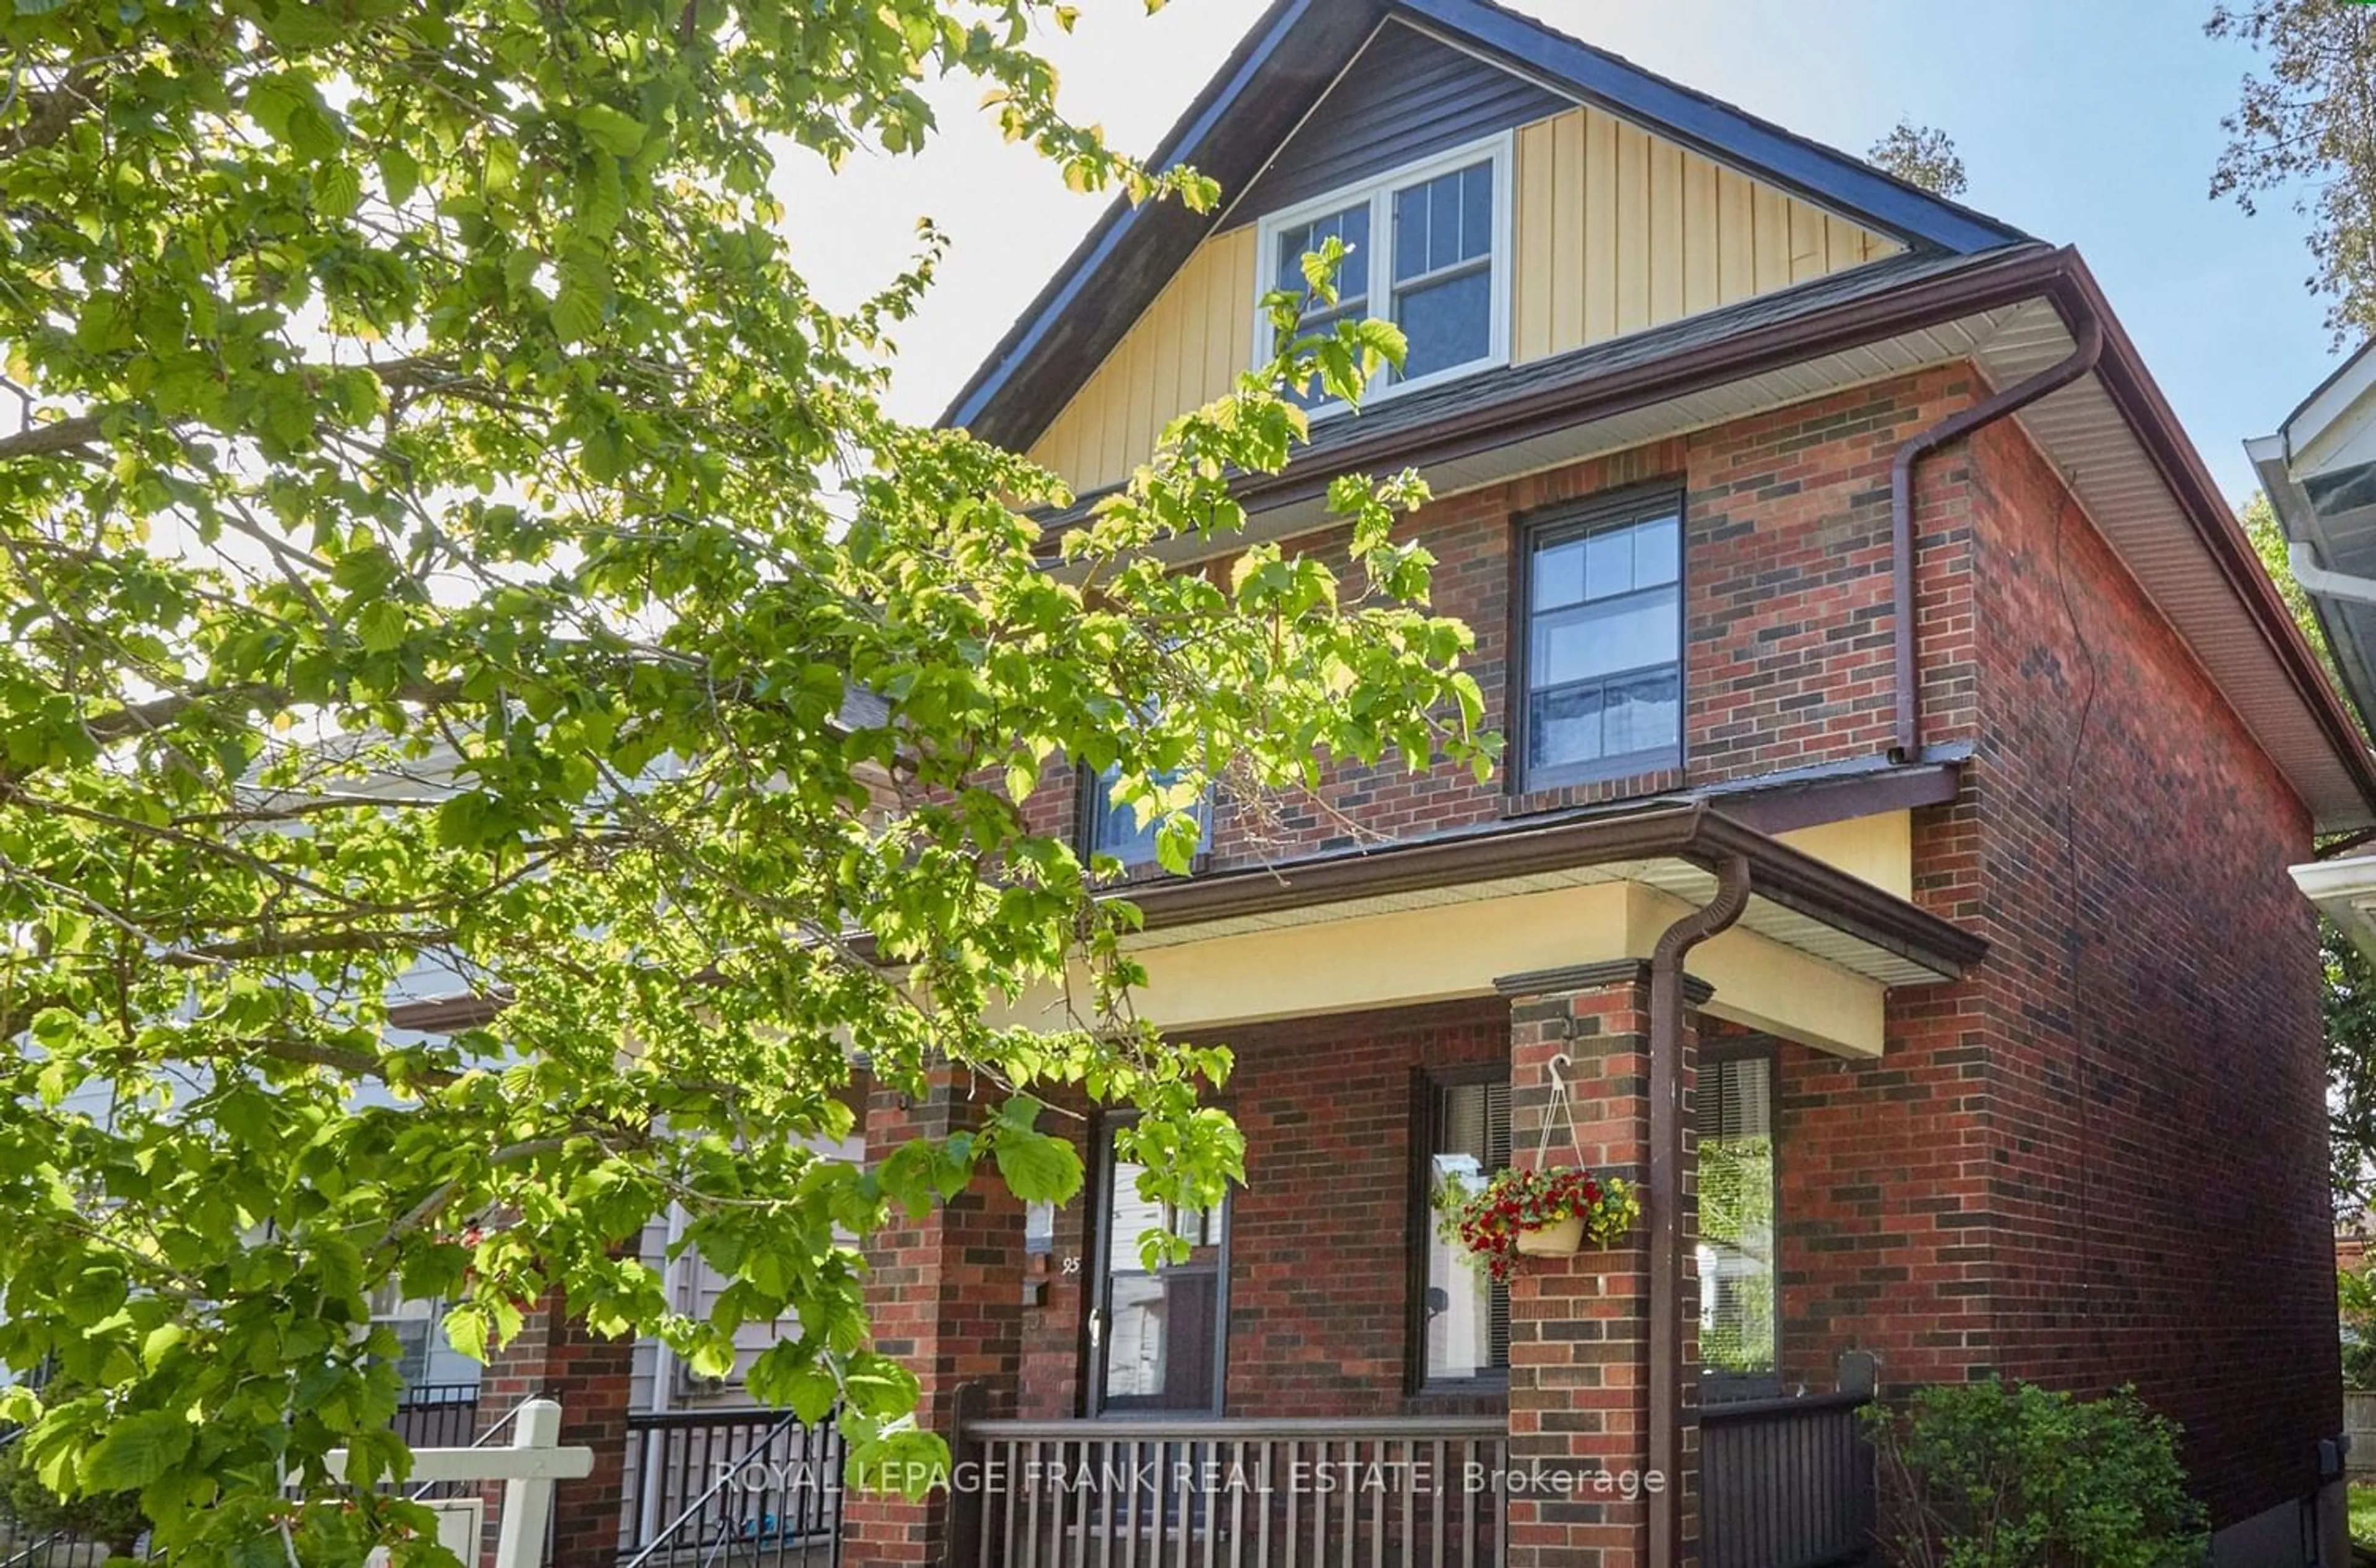 Home with brick exterior material for 95 Agnes St, Oshawa Ontario L1G 1V3